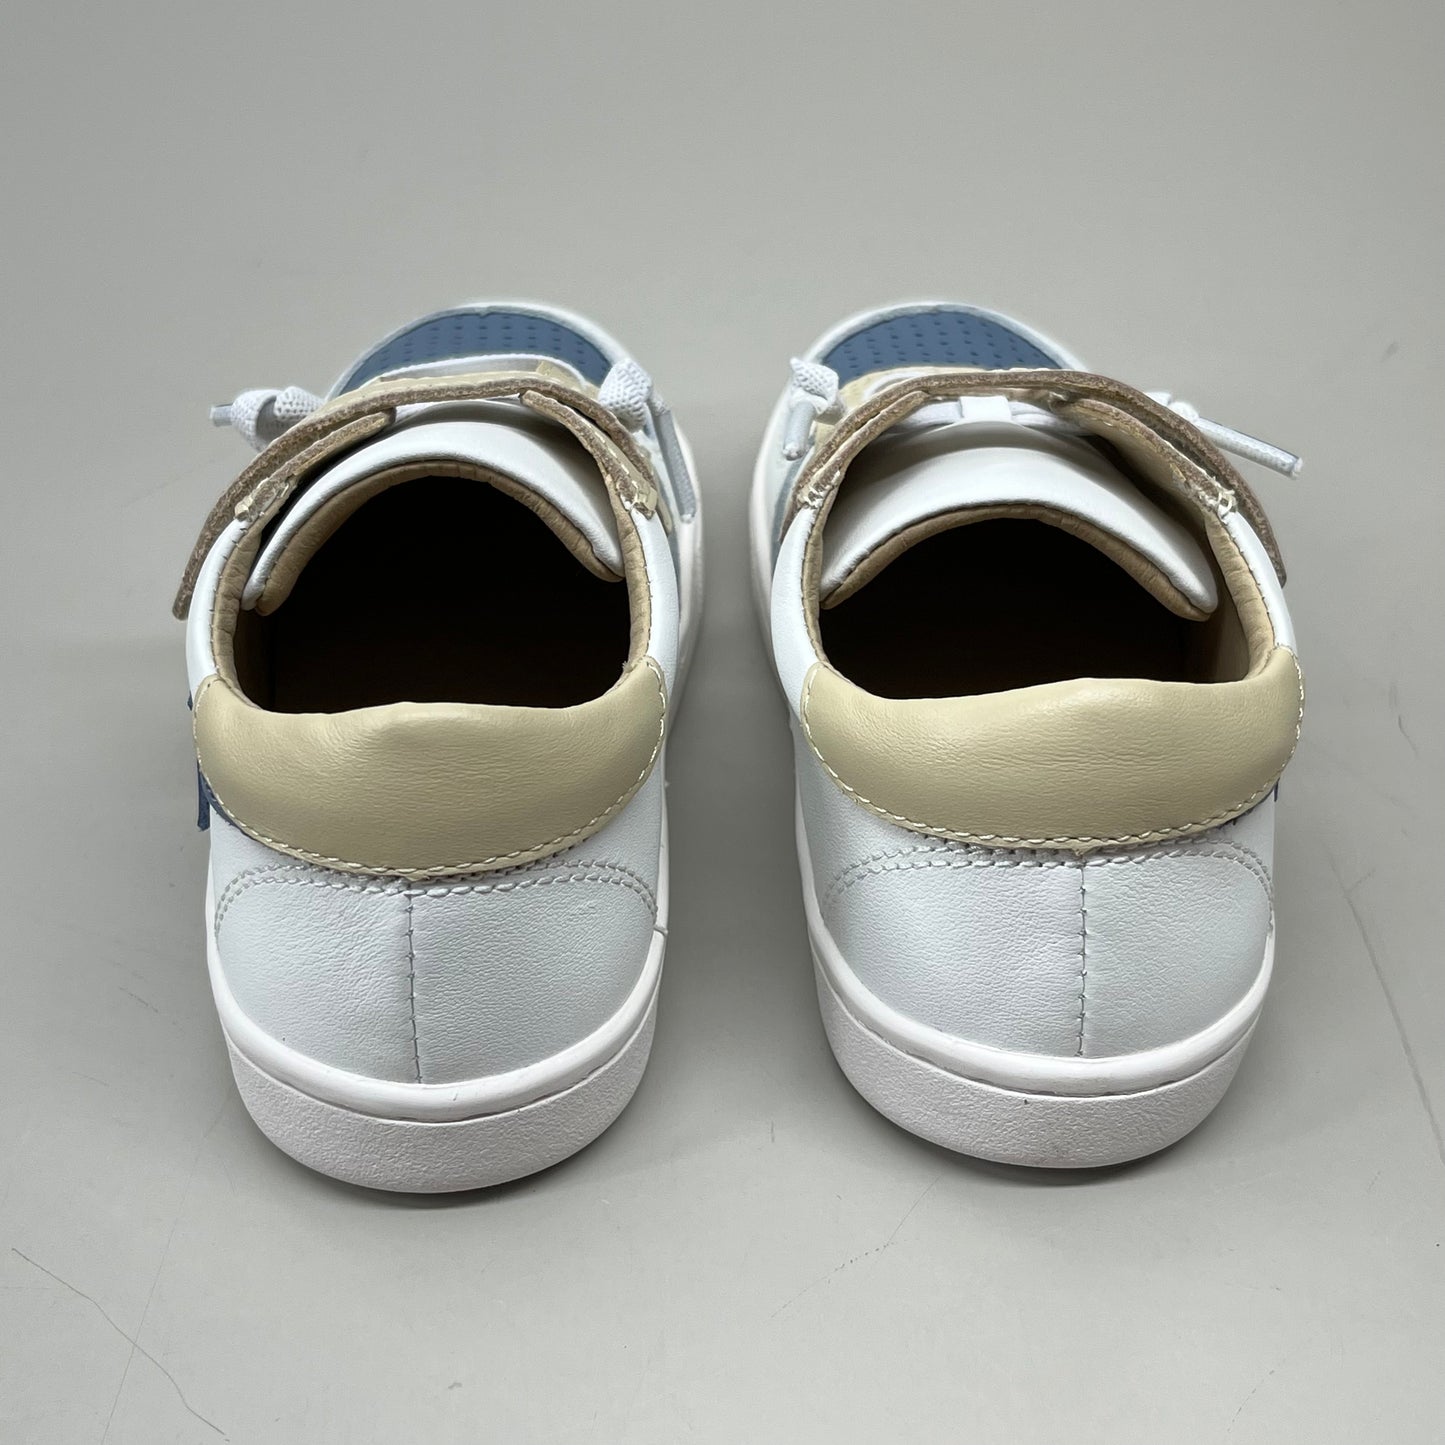 OLD SOLES Runsky Sneakers Leather Shoe Kid’s Sz 29 US 12 Cream/Indigo/Snow #6135